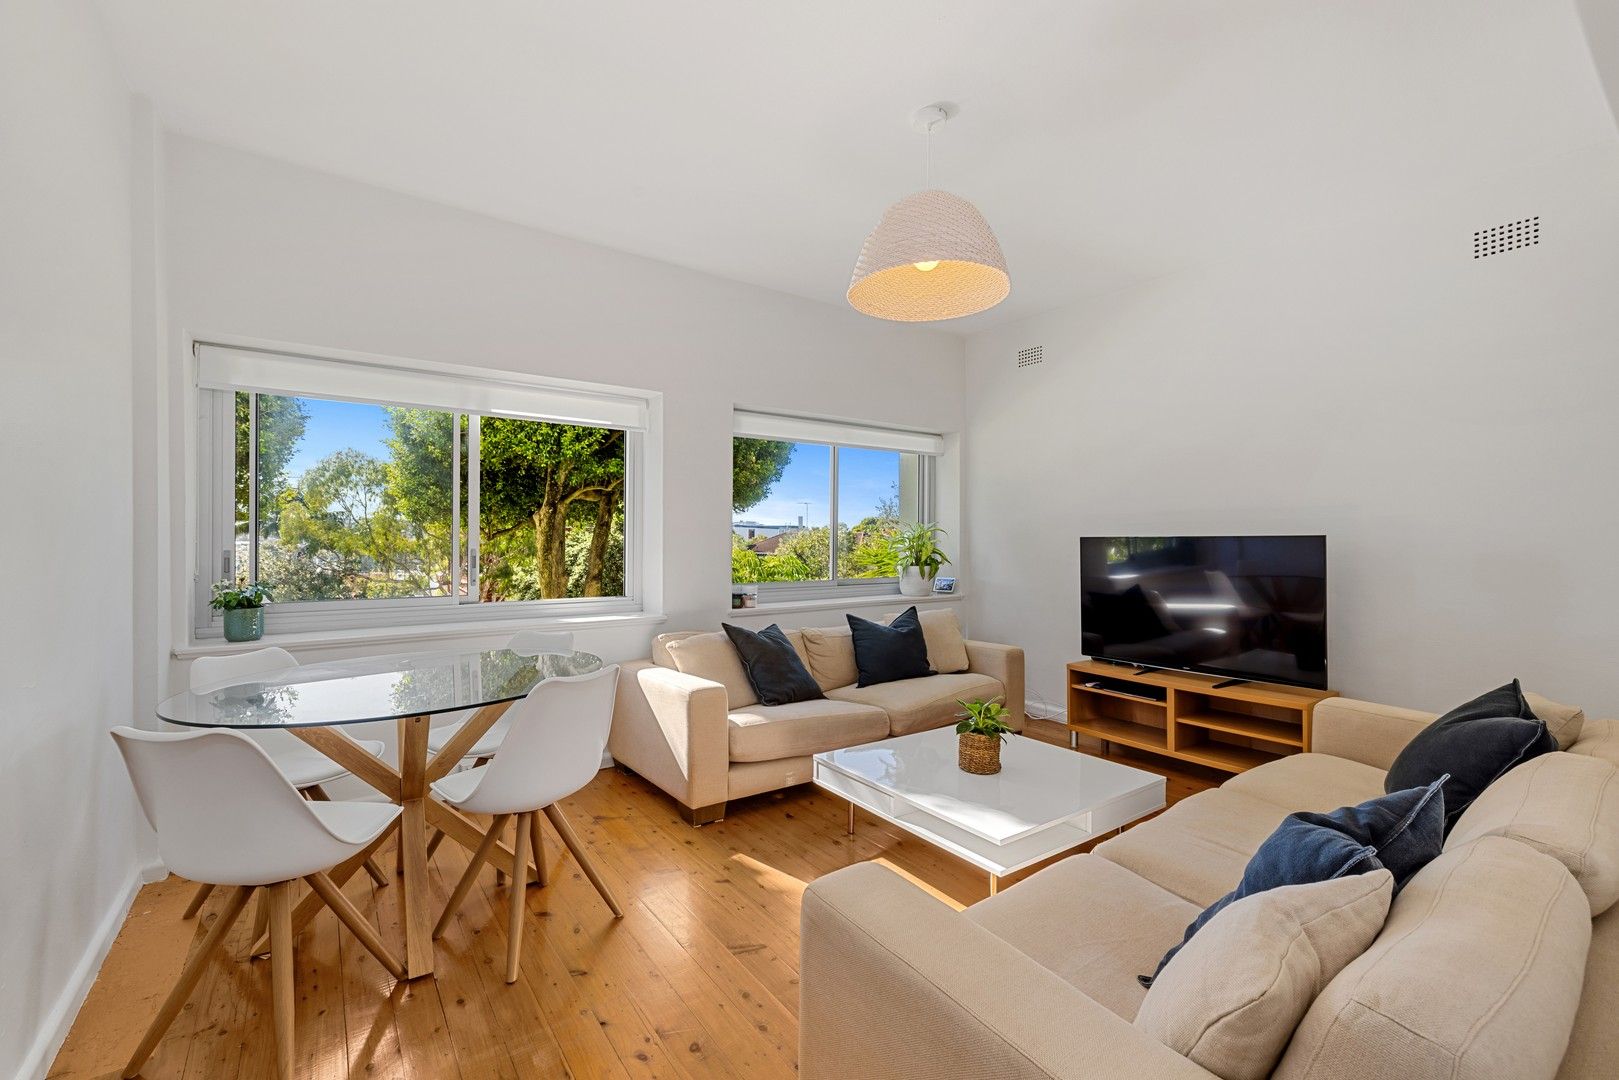 2 bedrooms Apartment / Unit / Flat in 2/12 Francis Street BONDI BEACH NSW, 2026